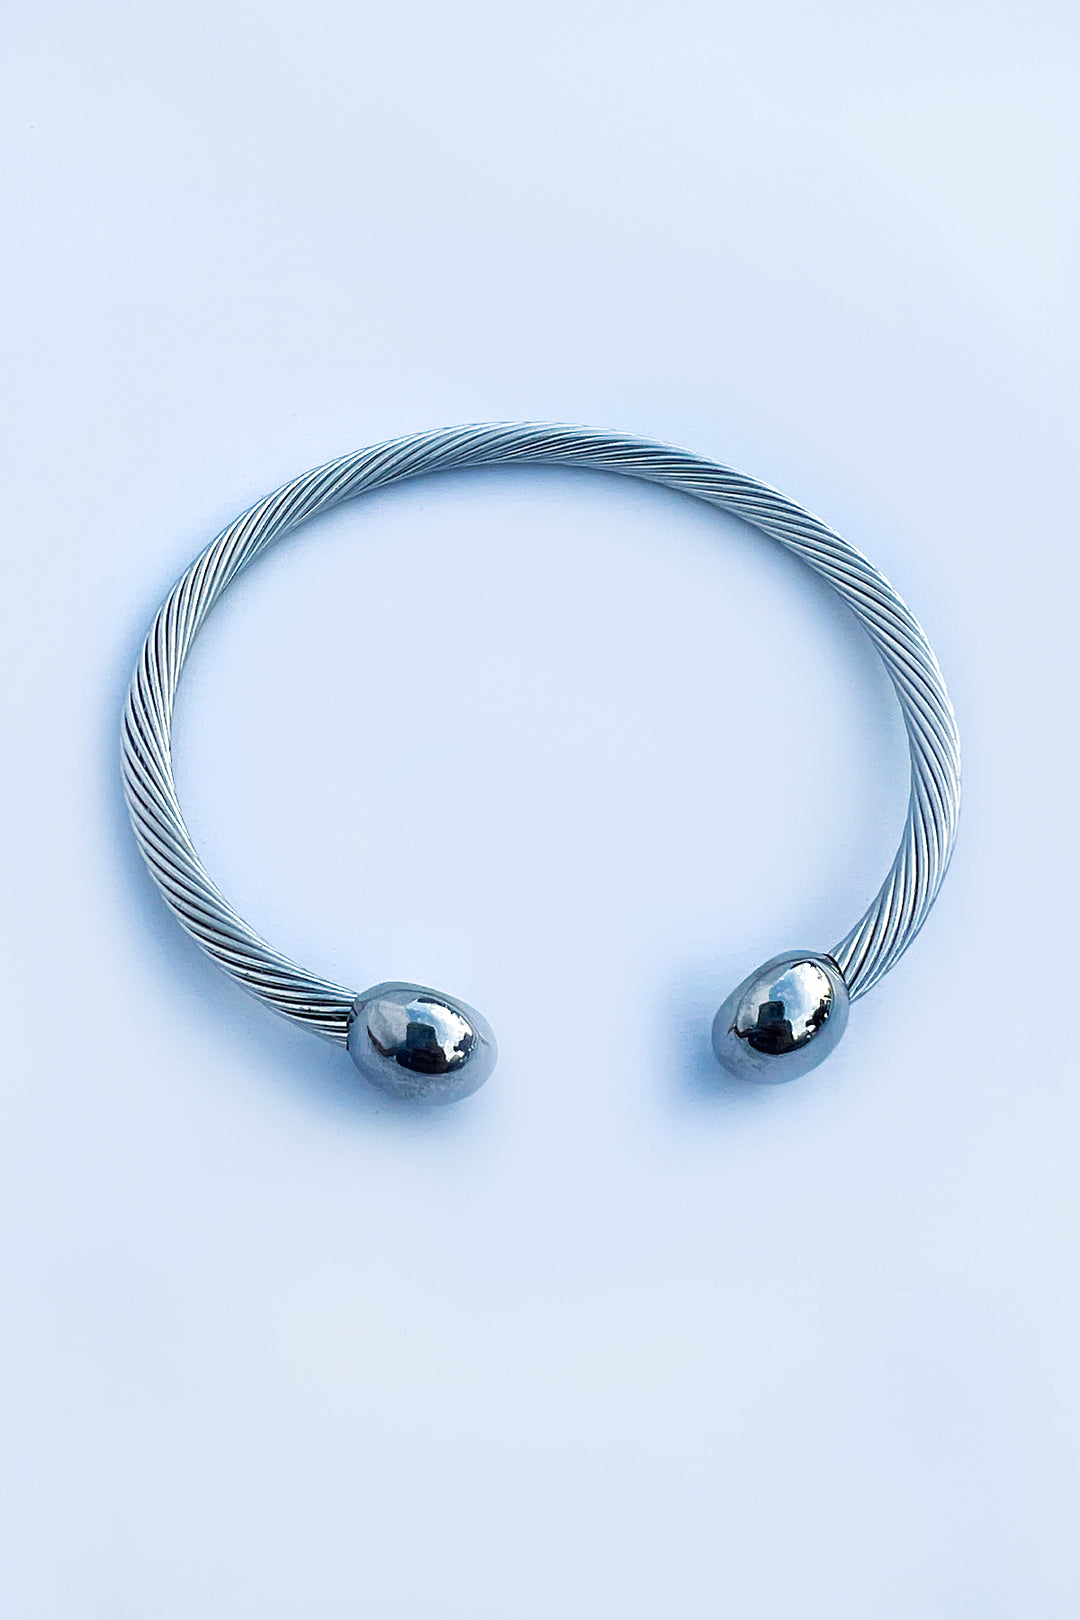 Stainless Steel Silver Bracelet - S23 - MJW0059